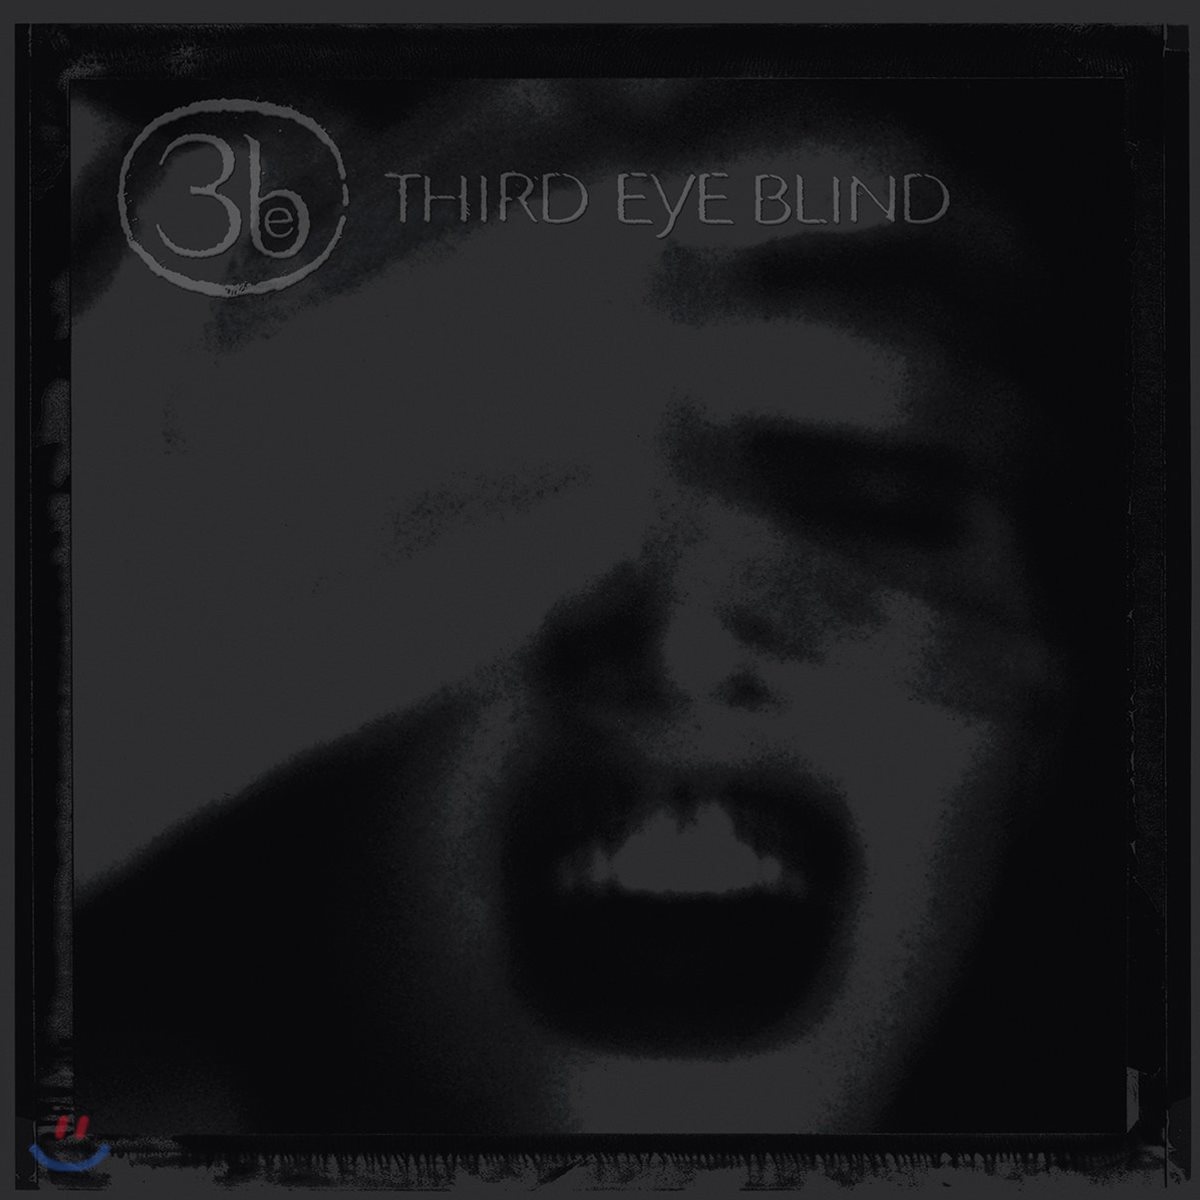 Third Eye Blind - Third Eye Blind 써드 아이 블라인드 데뷔 앨범 [20th Anniversary Deluxe Edition]